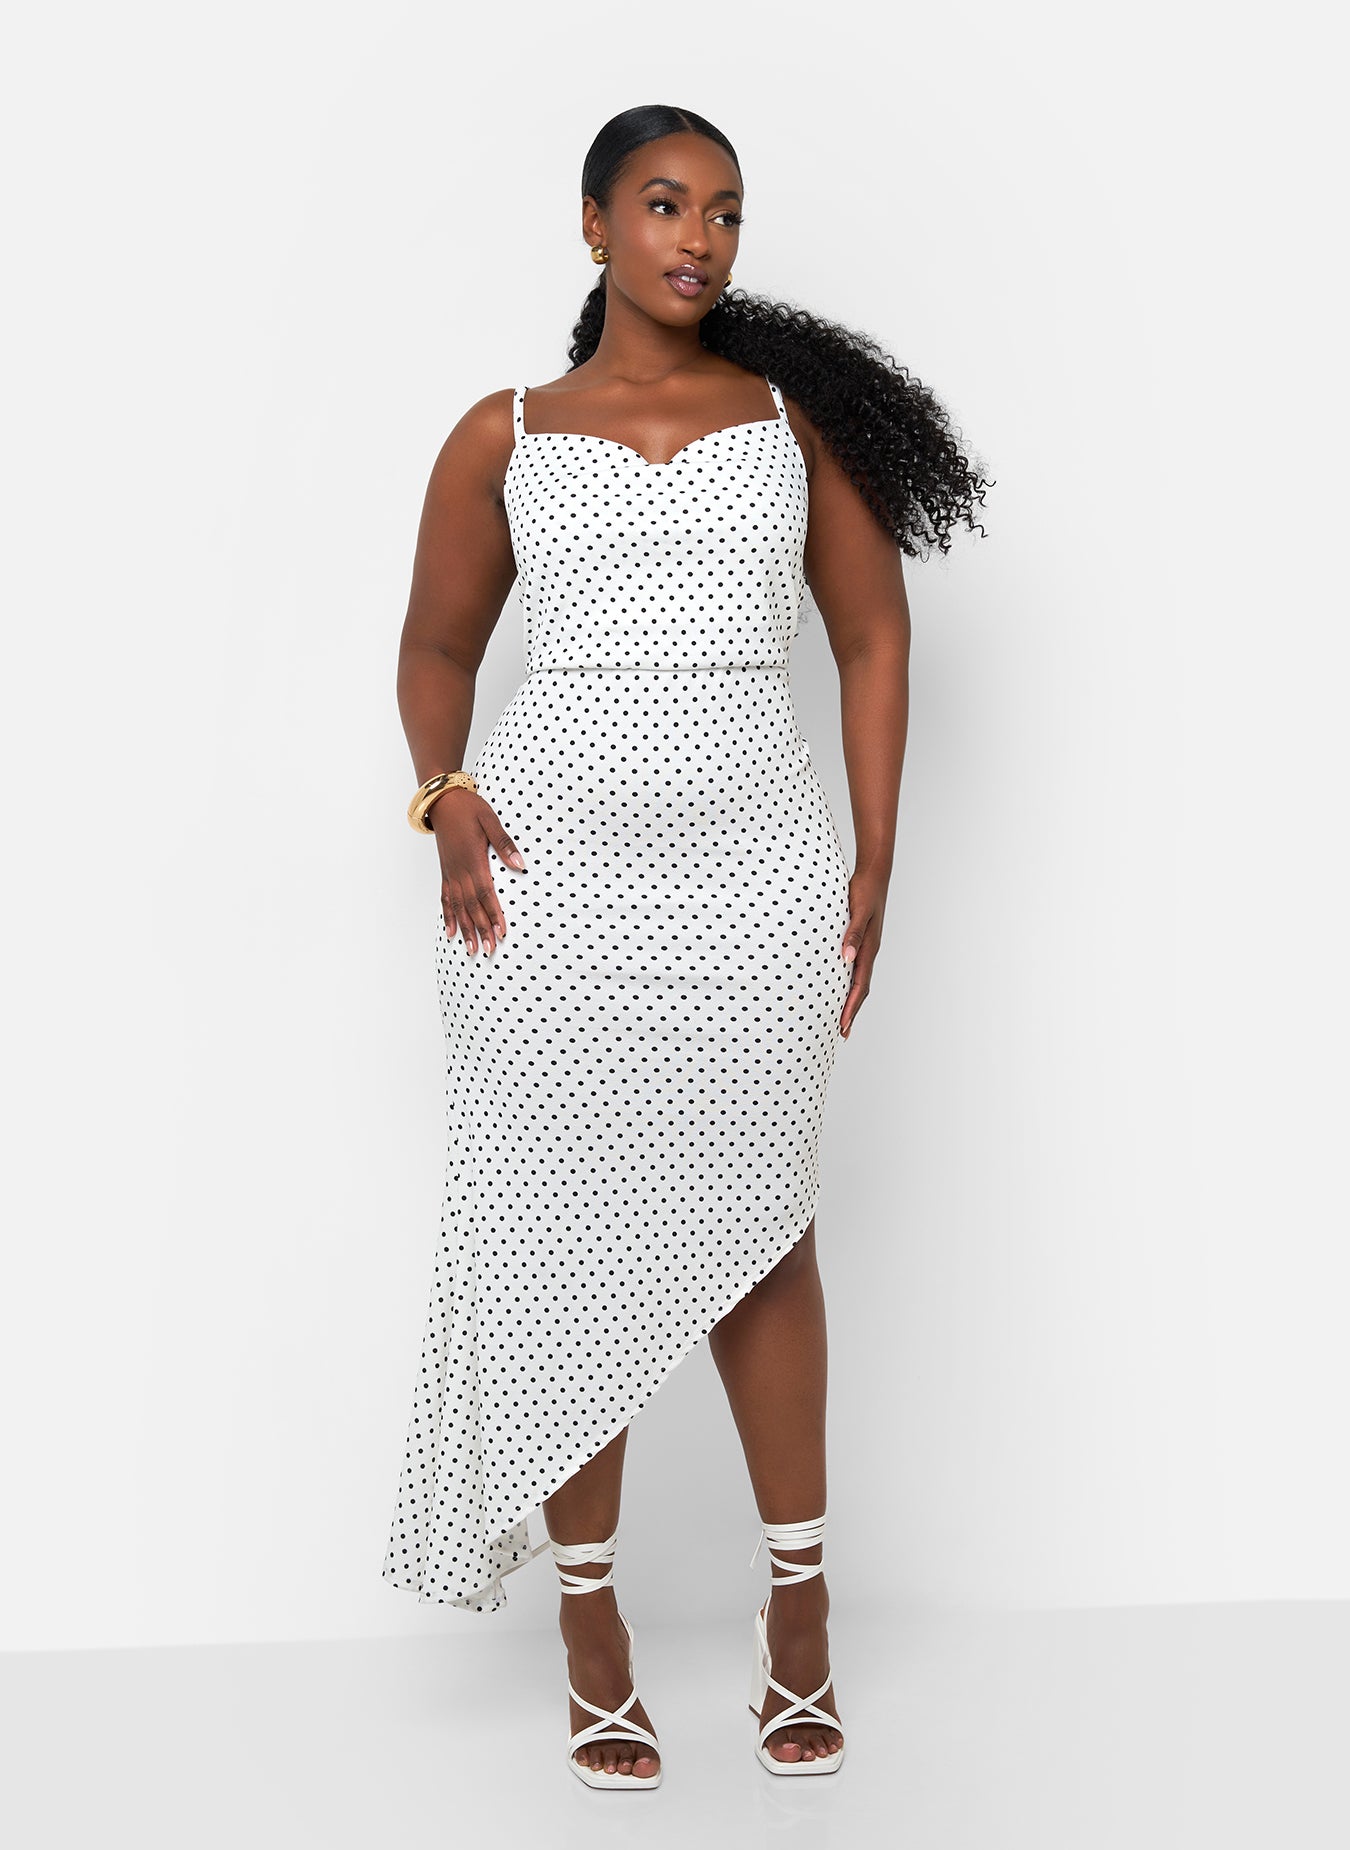 Plus Sized Fashion Nova Curve Bubble Textured Mini Dress in White